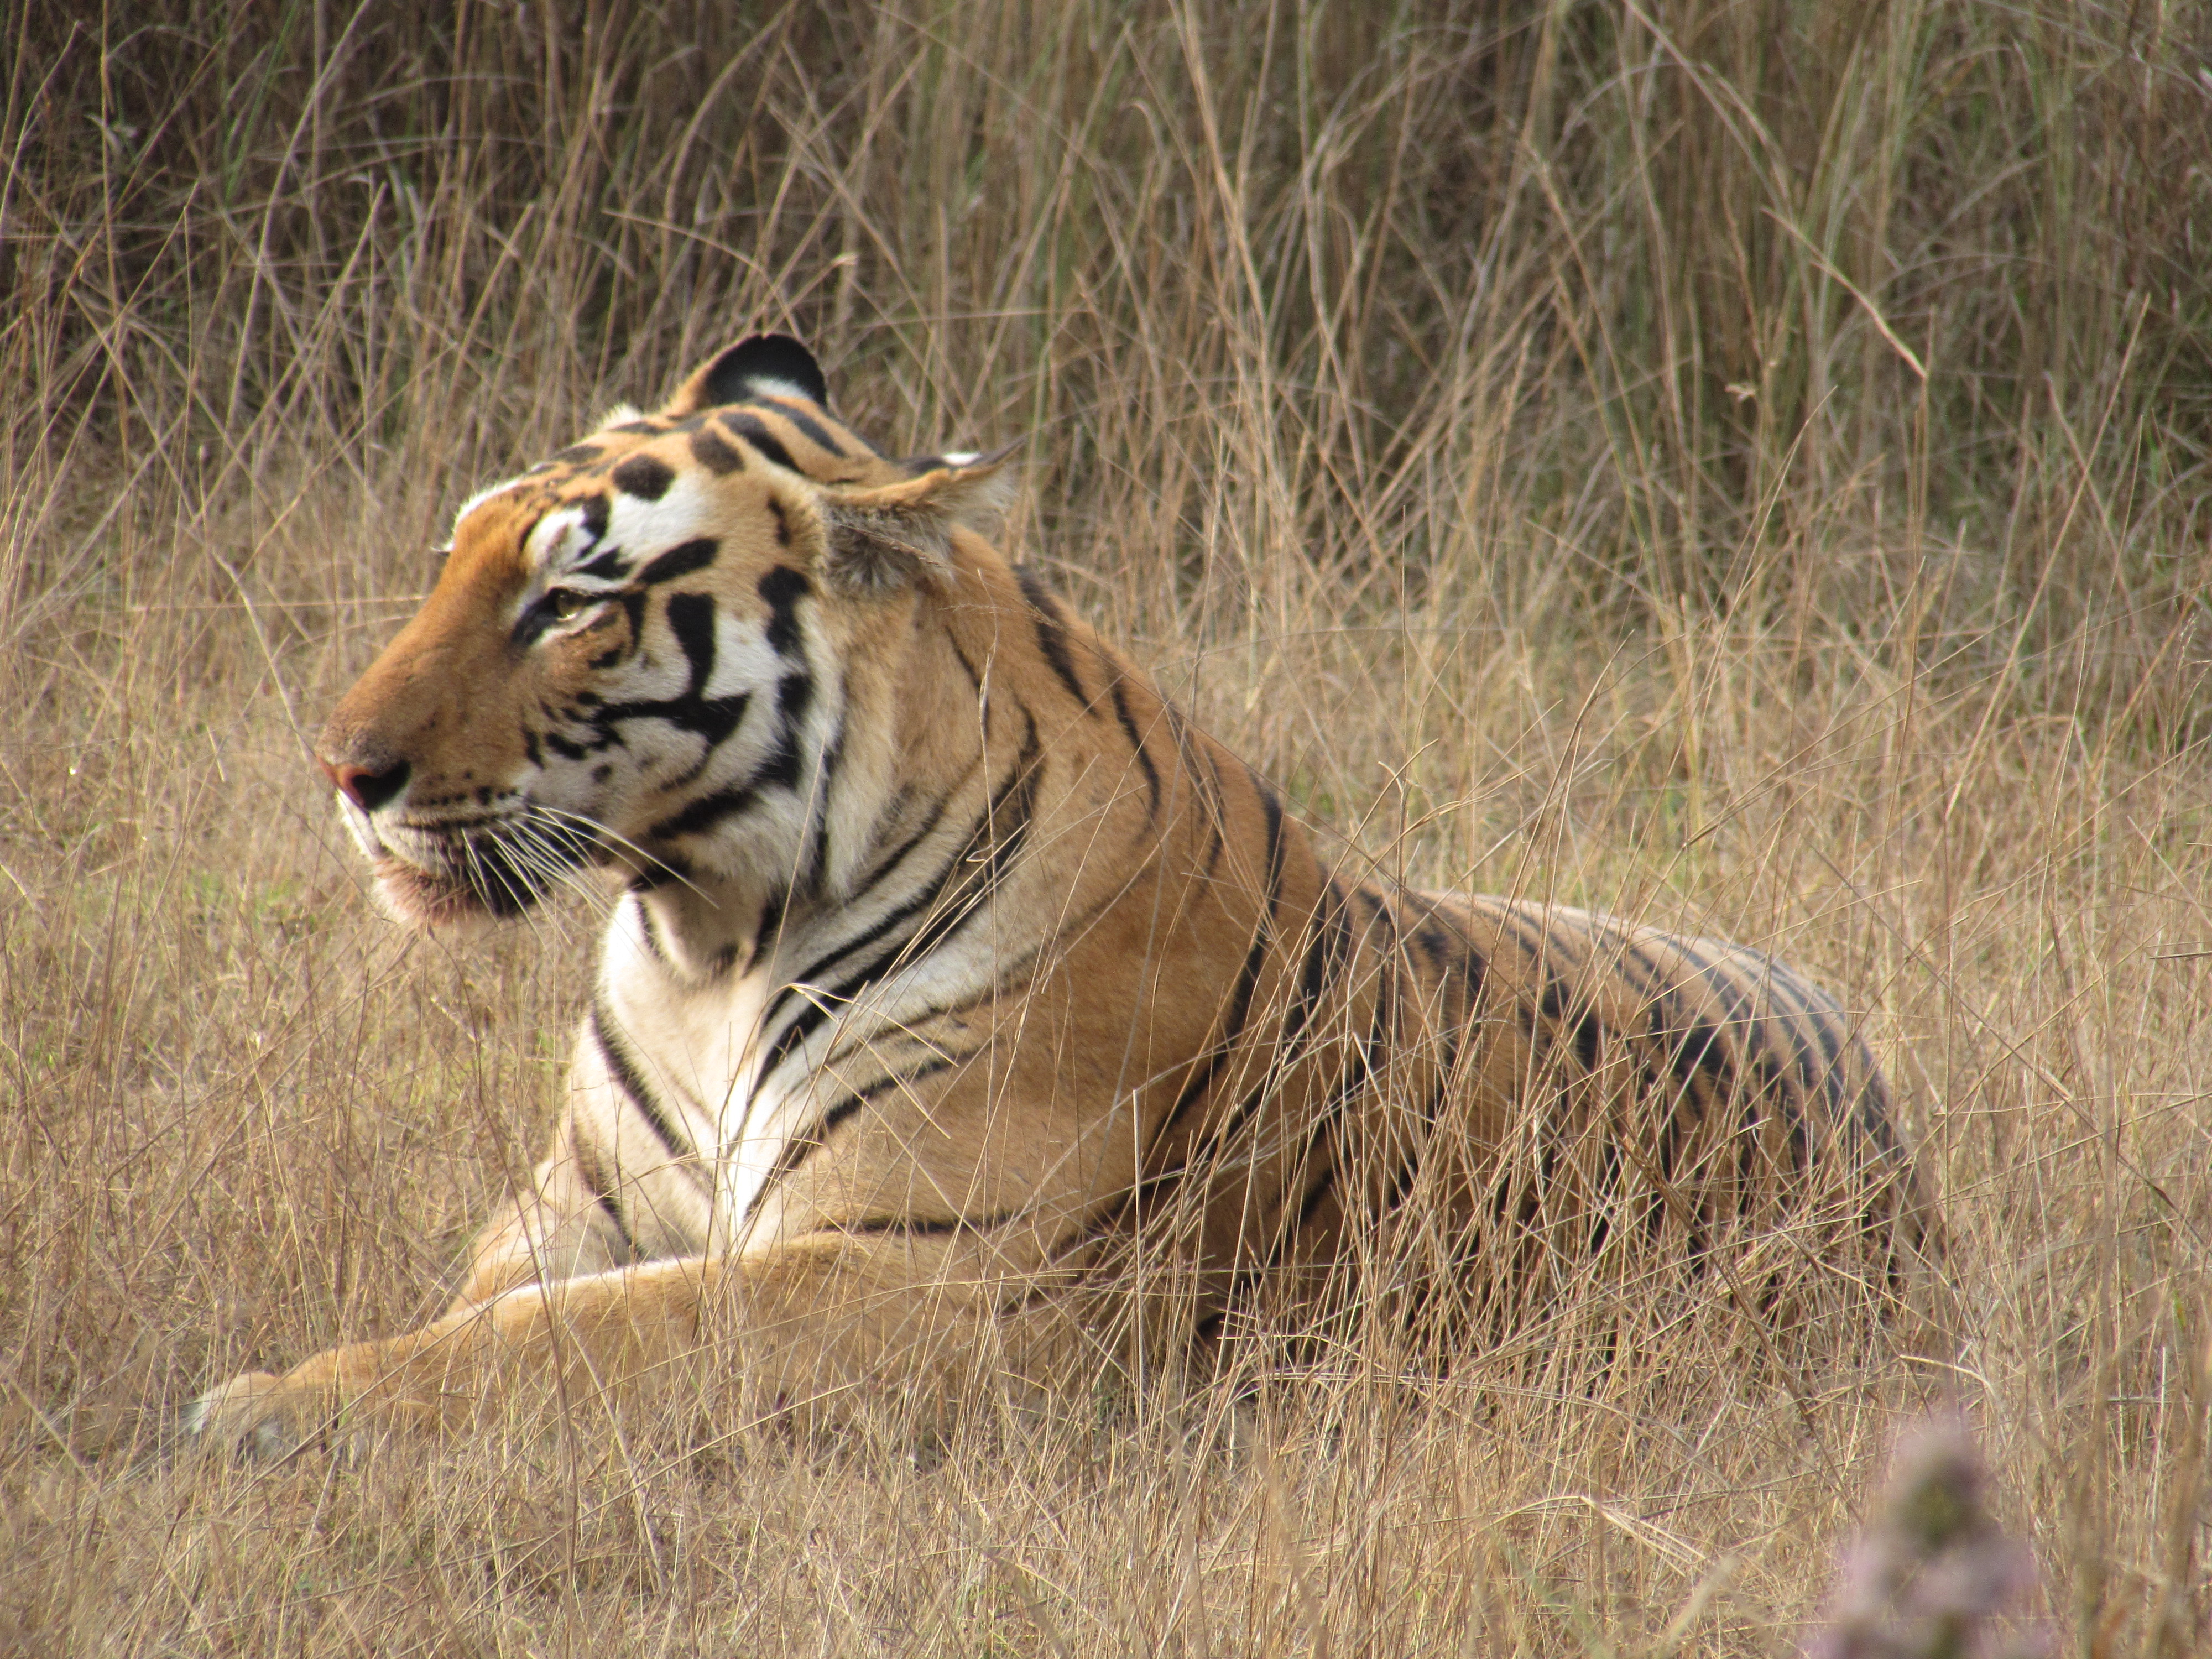 Achnakmar Tiger Reserve